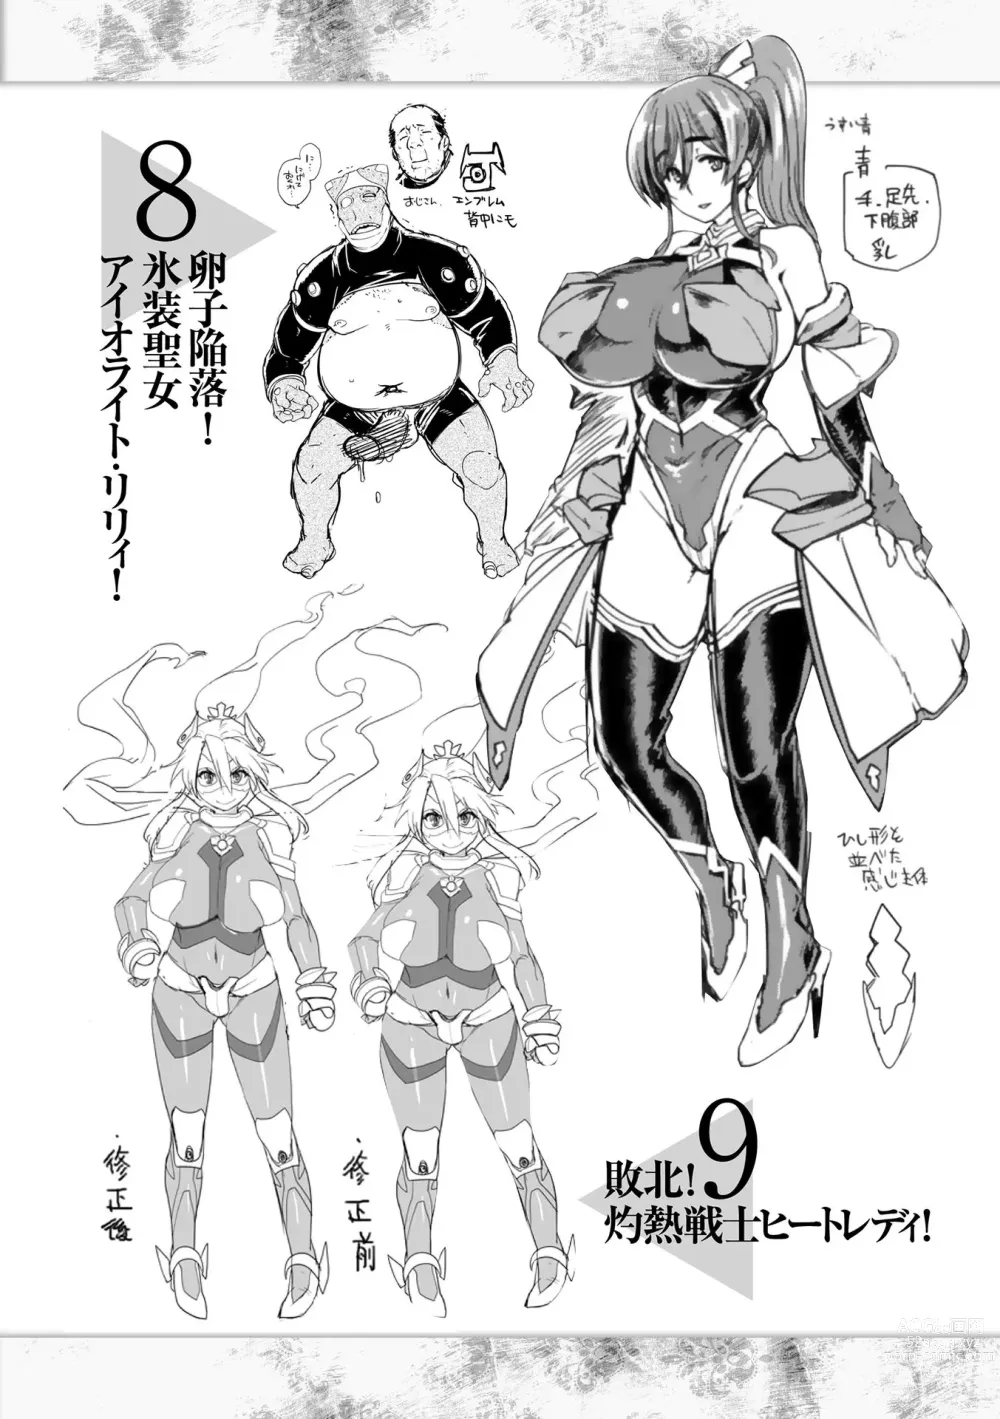 Page 176 of manga Kusshita Otome ga Ochiru Koro - When a surrendered maiden becomes sexually degraded